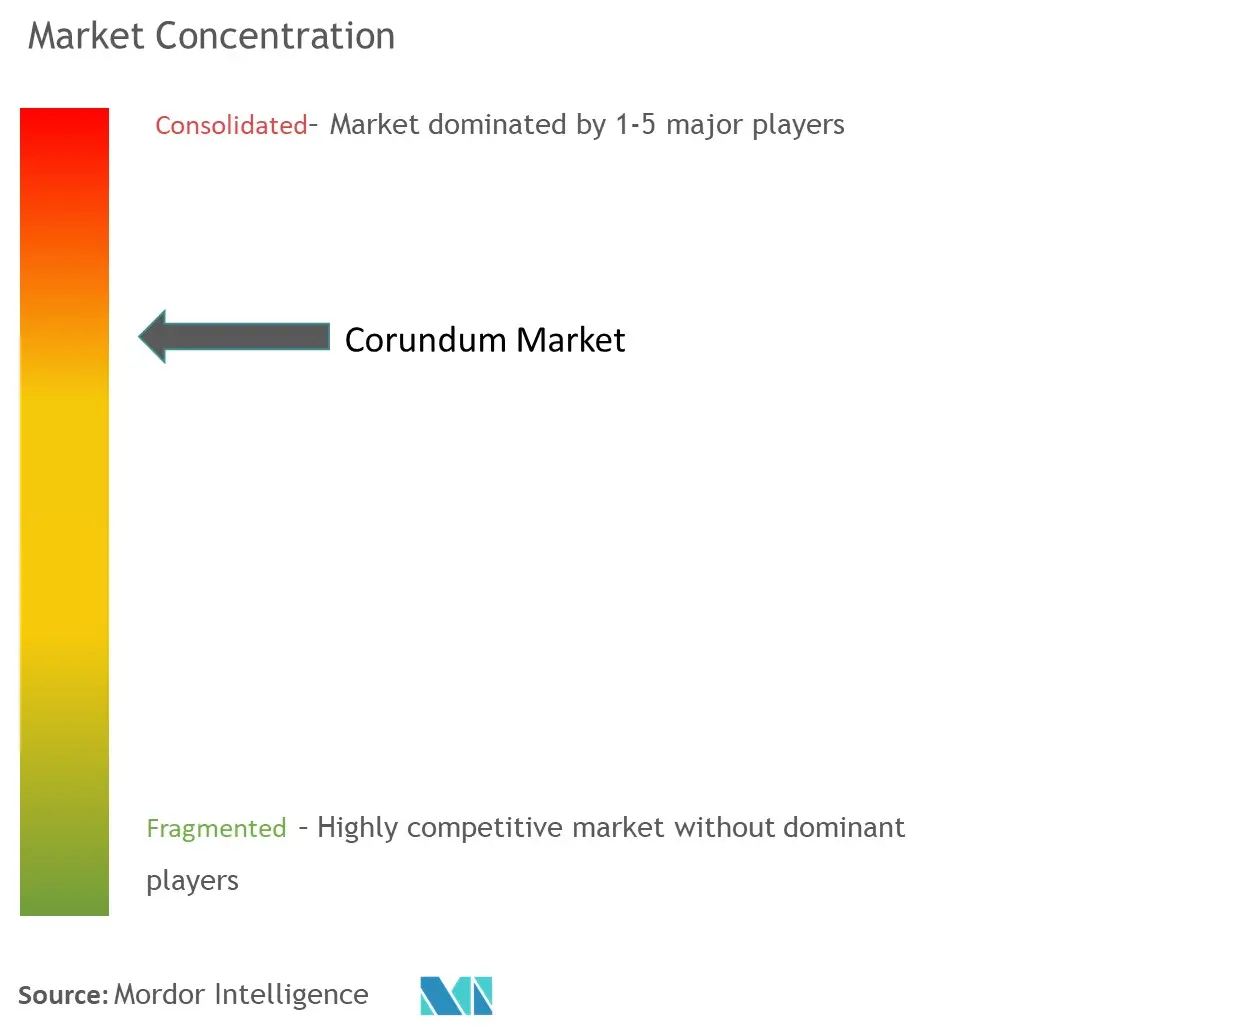 Corundum Market Concentration